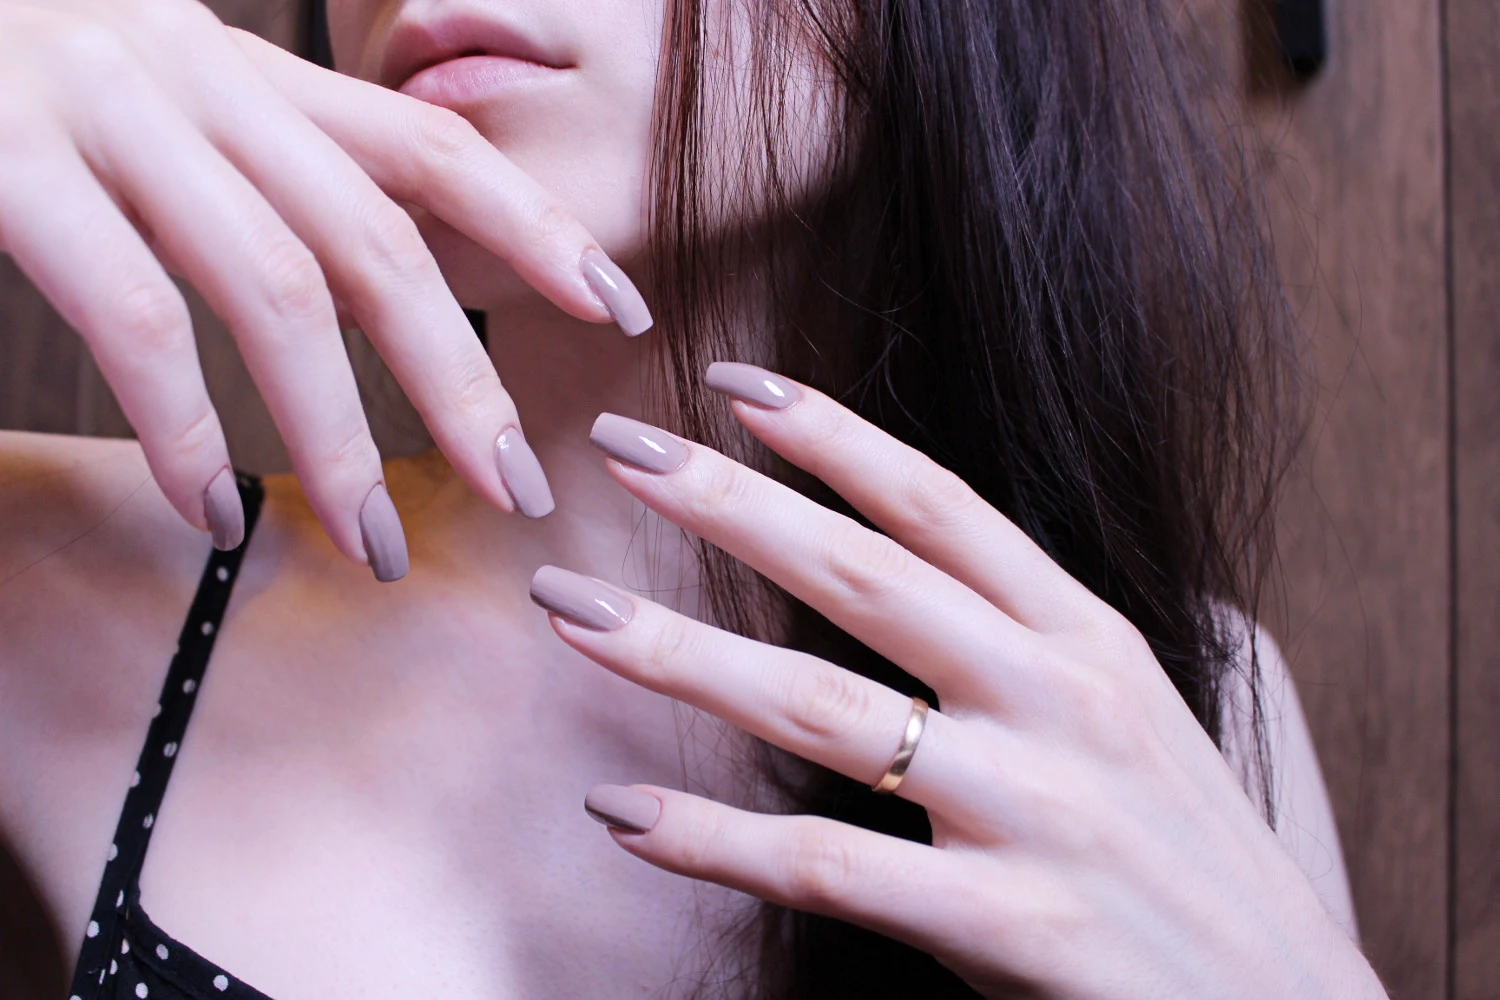 simple, nude nail polish and manicure